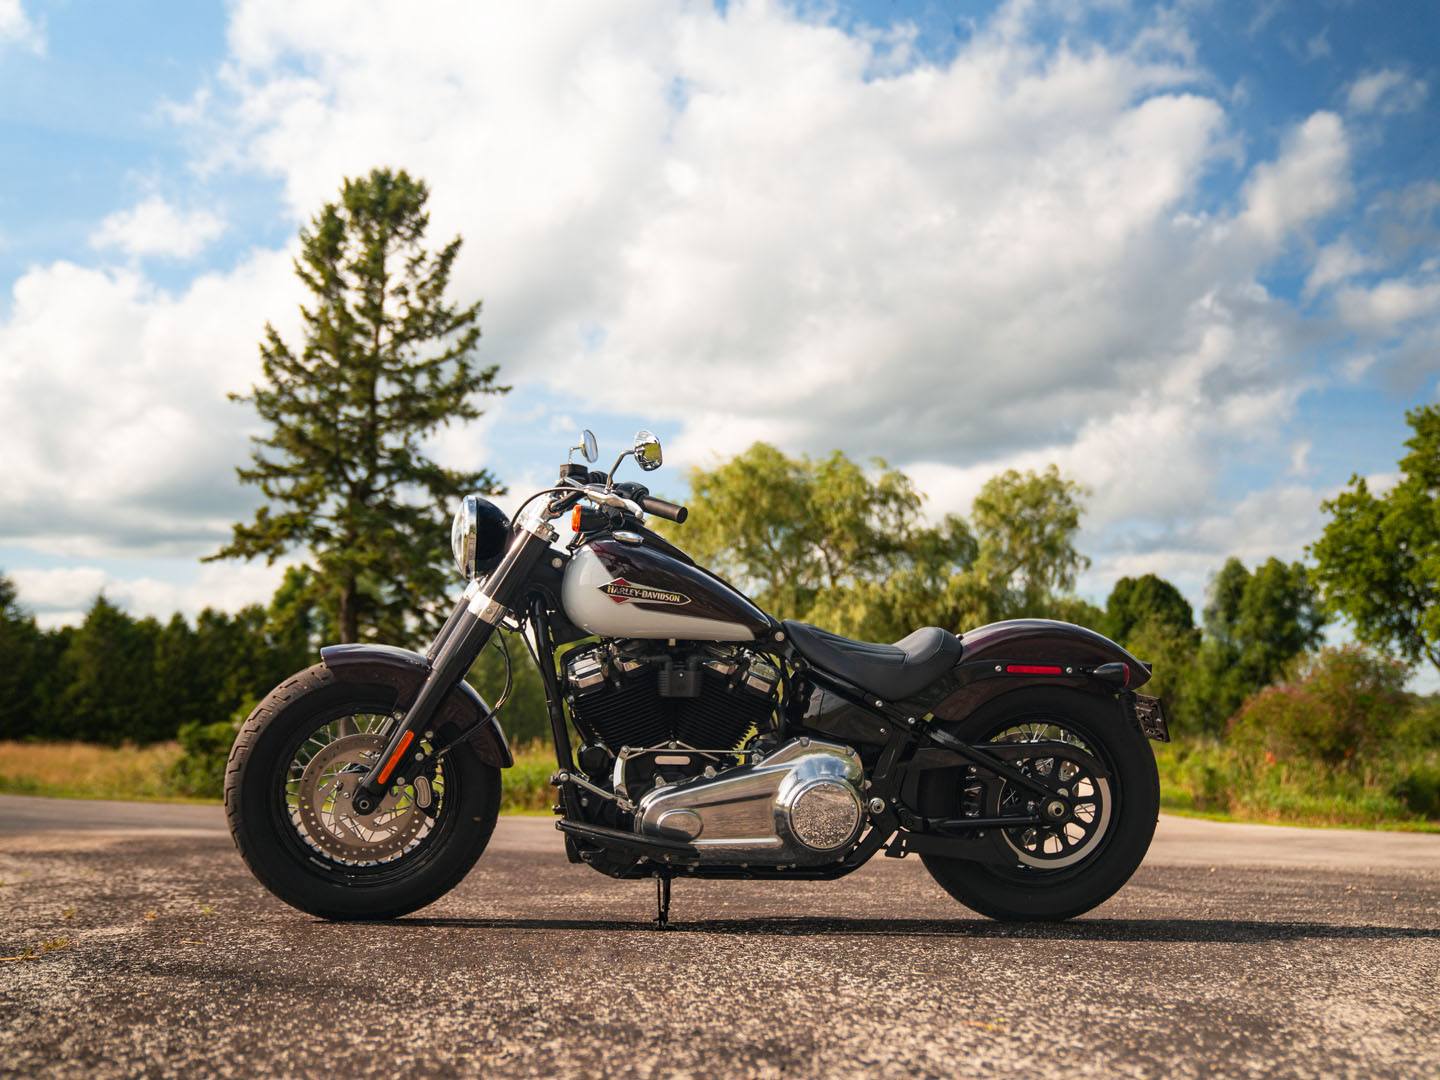 2021 Harley-Davidson Softail Slim® in Syracuse, New York - Photo 13